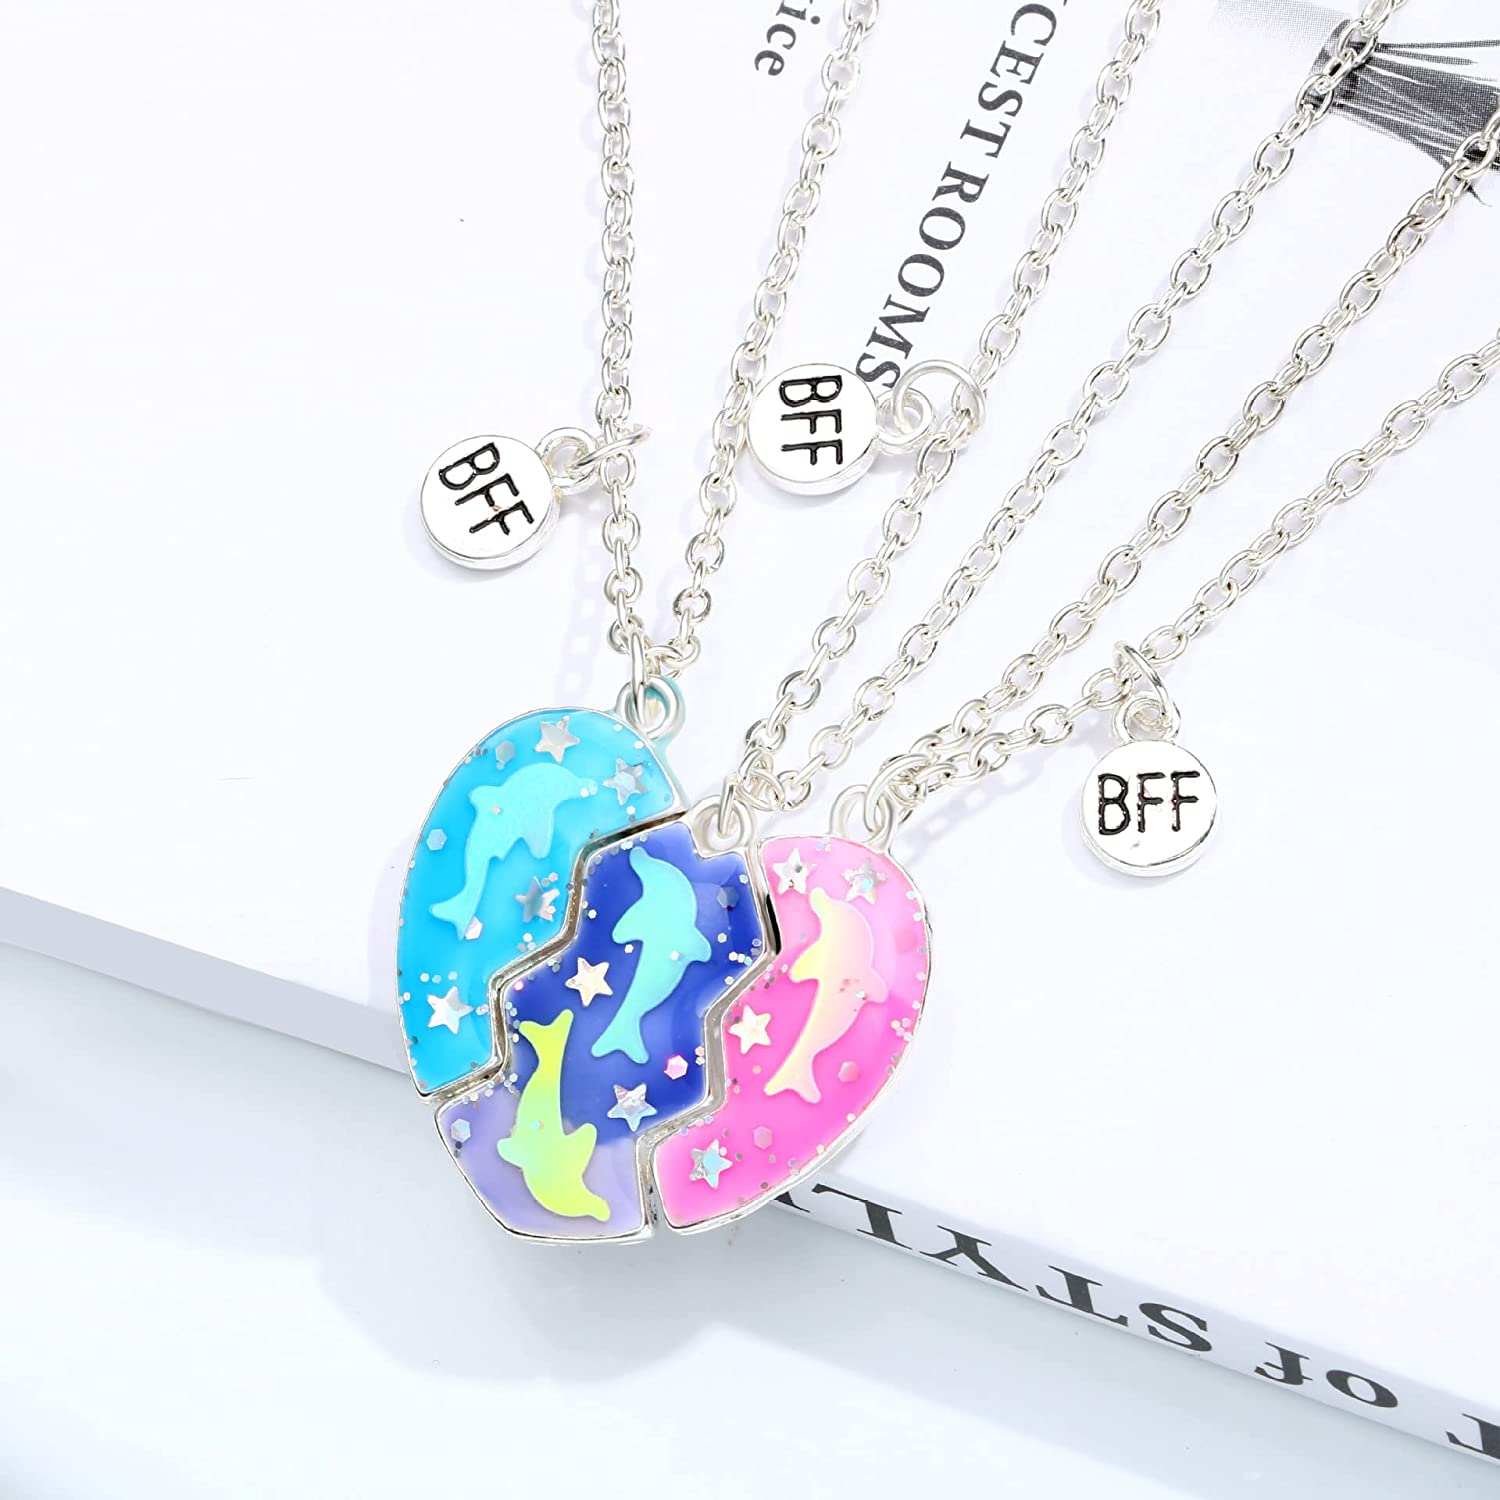 bff-heart-friendship-necklace